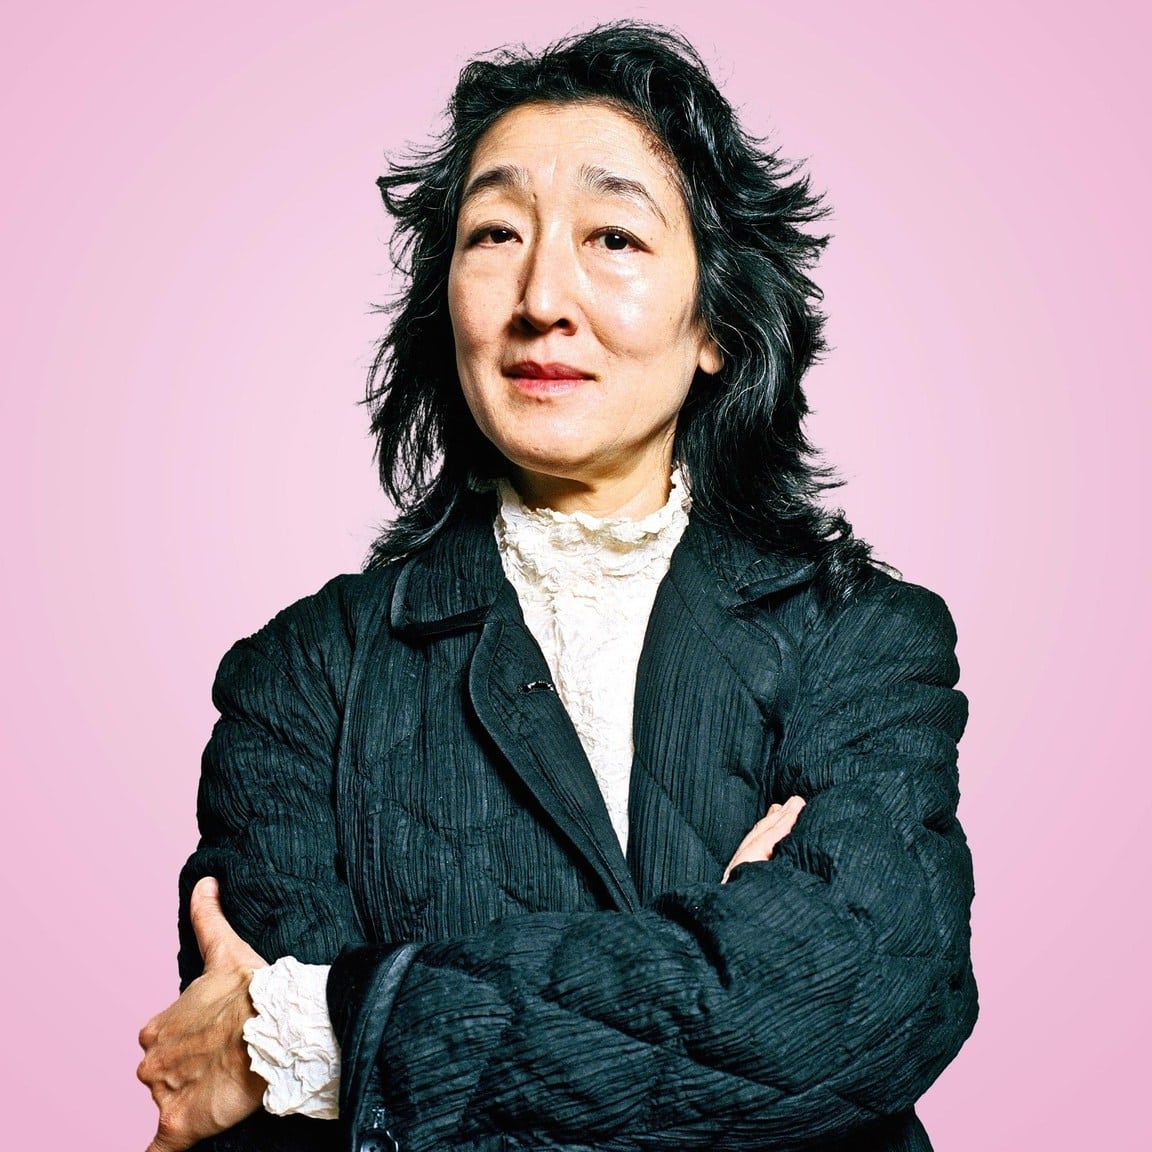 Mitsuko to NY Times: ‘I don’t self-analyze’